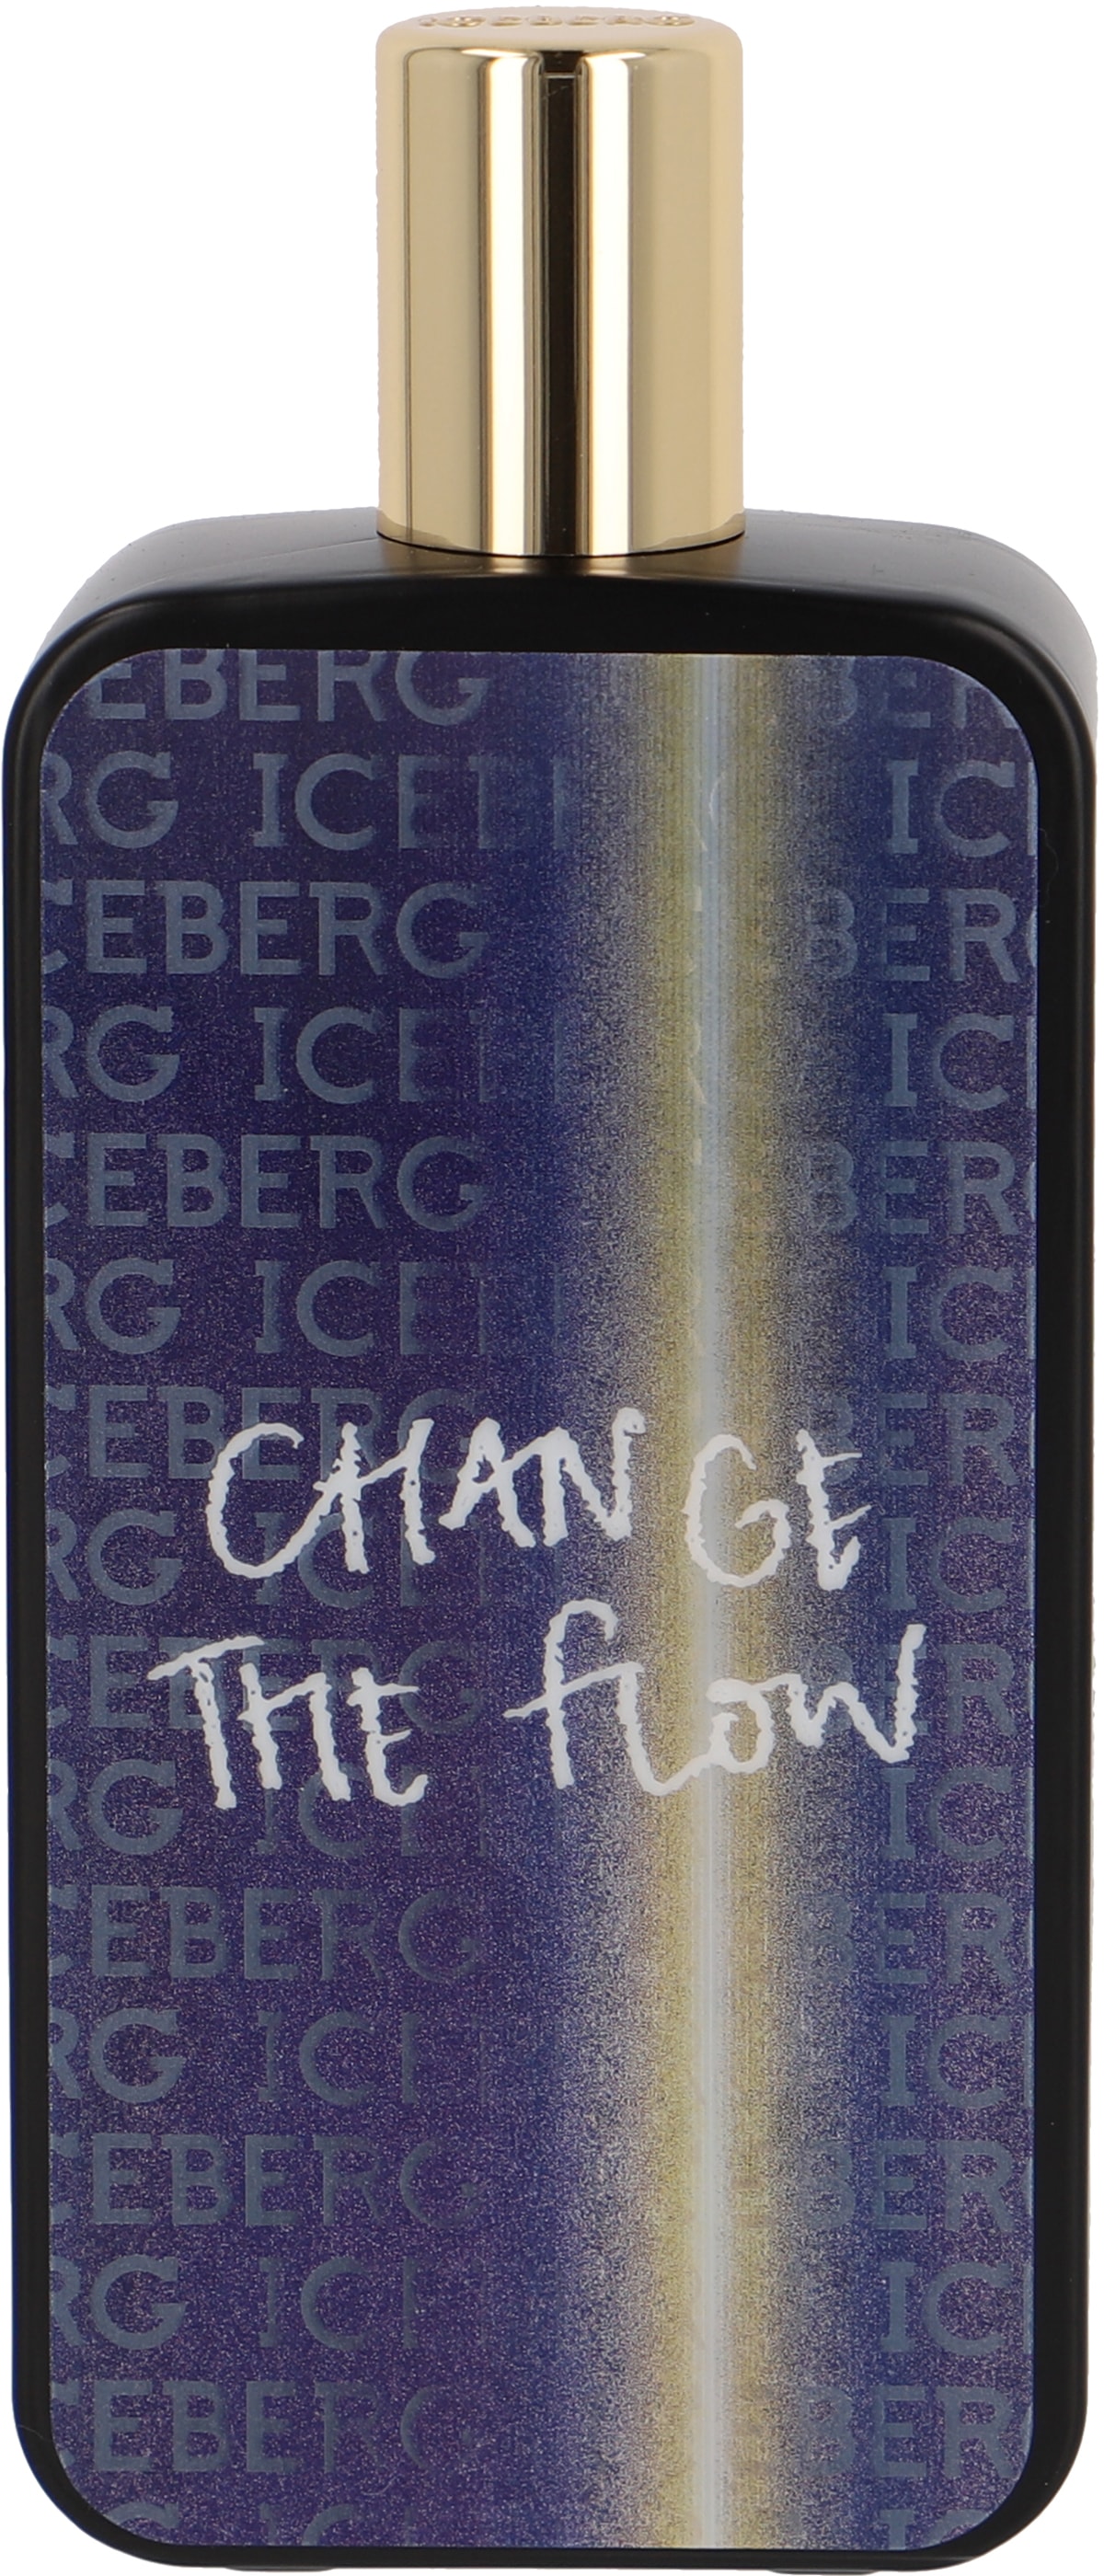 | Toilette Eau »ICEBERG ICEBERG BAUR de The Change Flow«